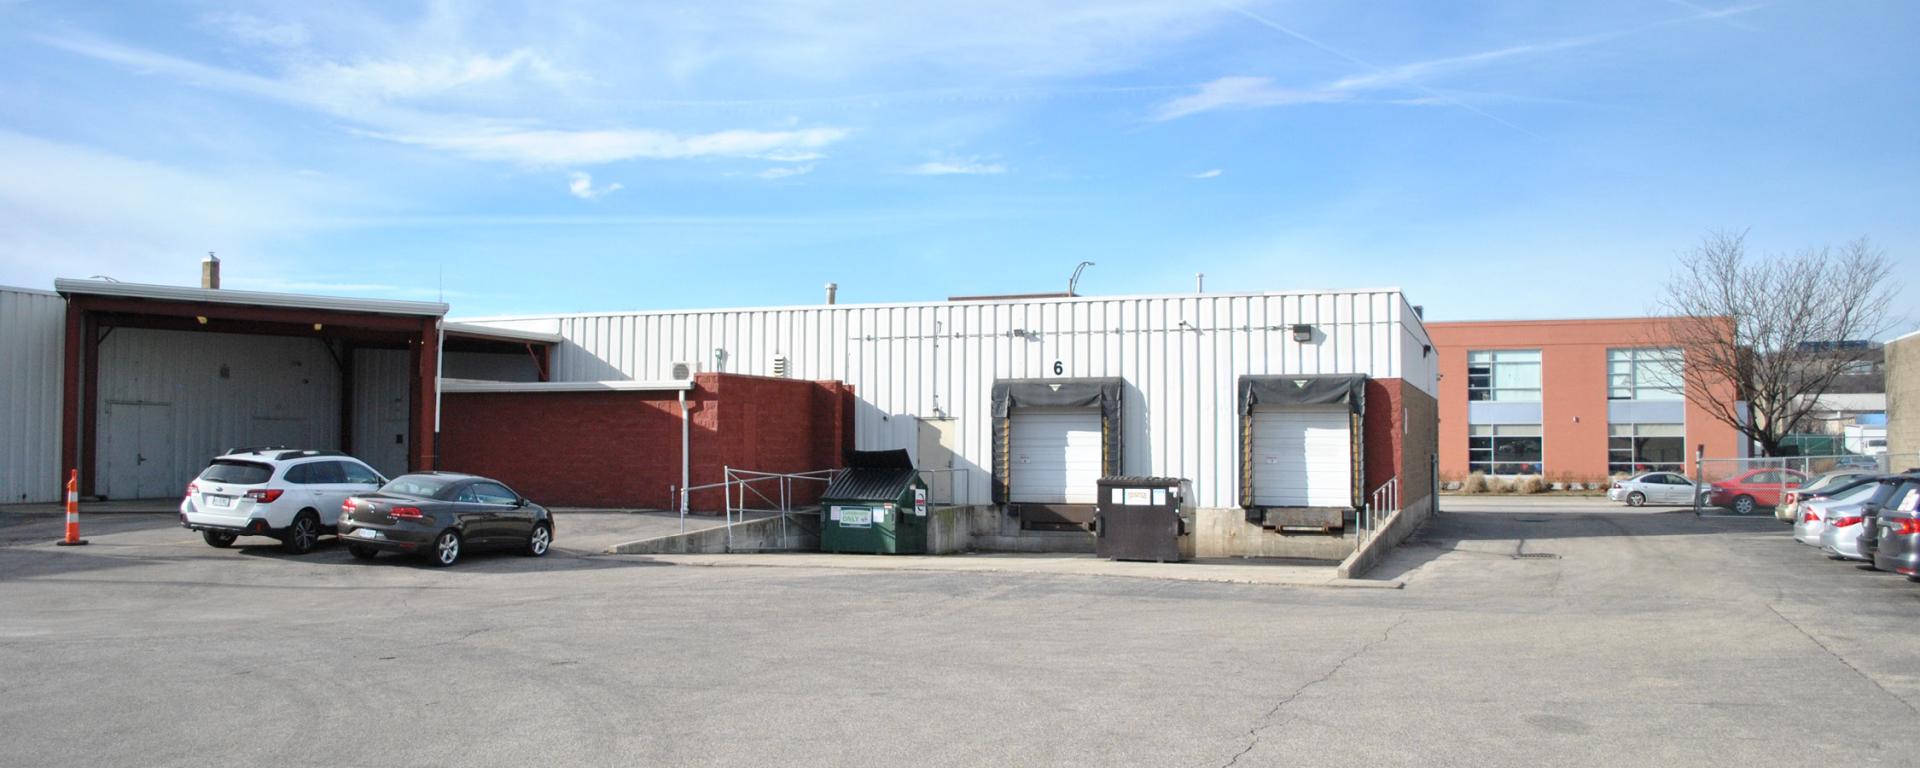 dock doors and car parking for distribution center